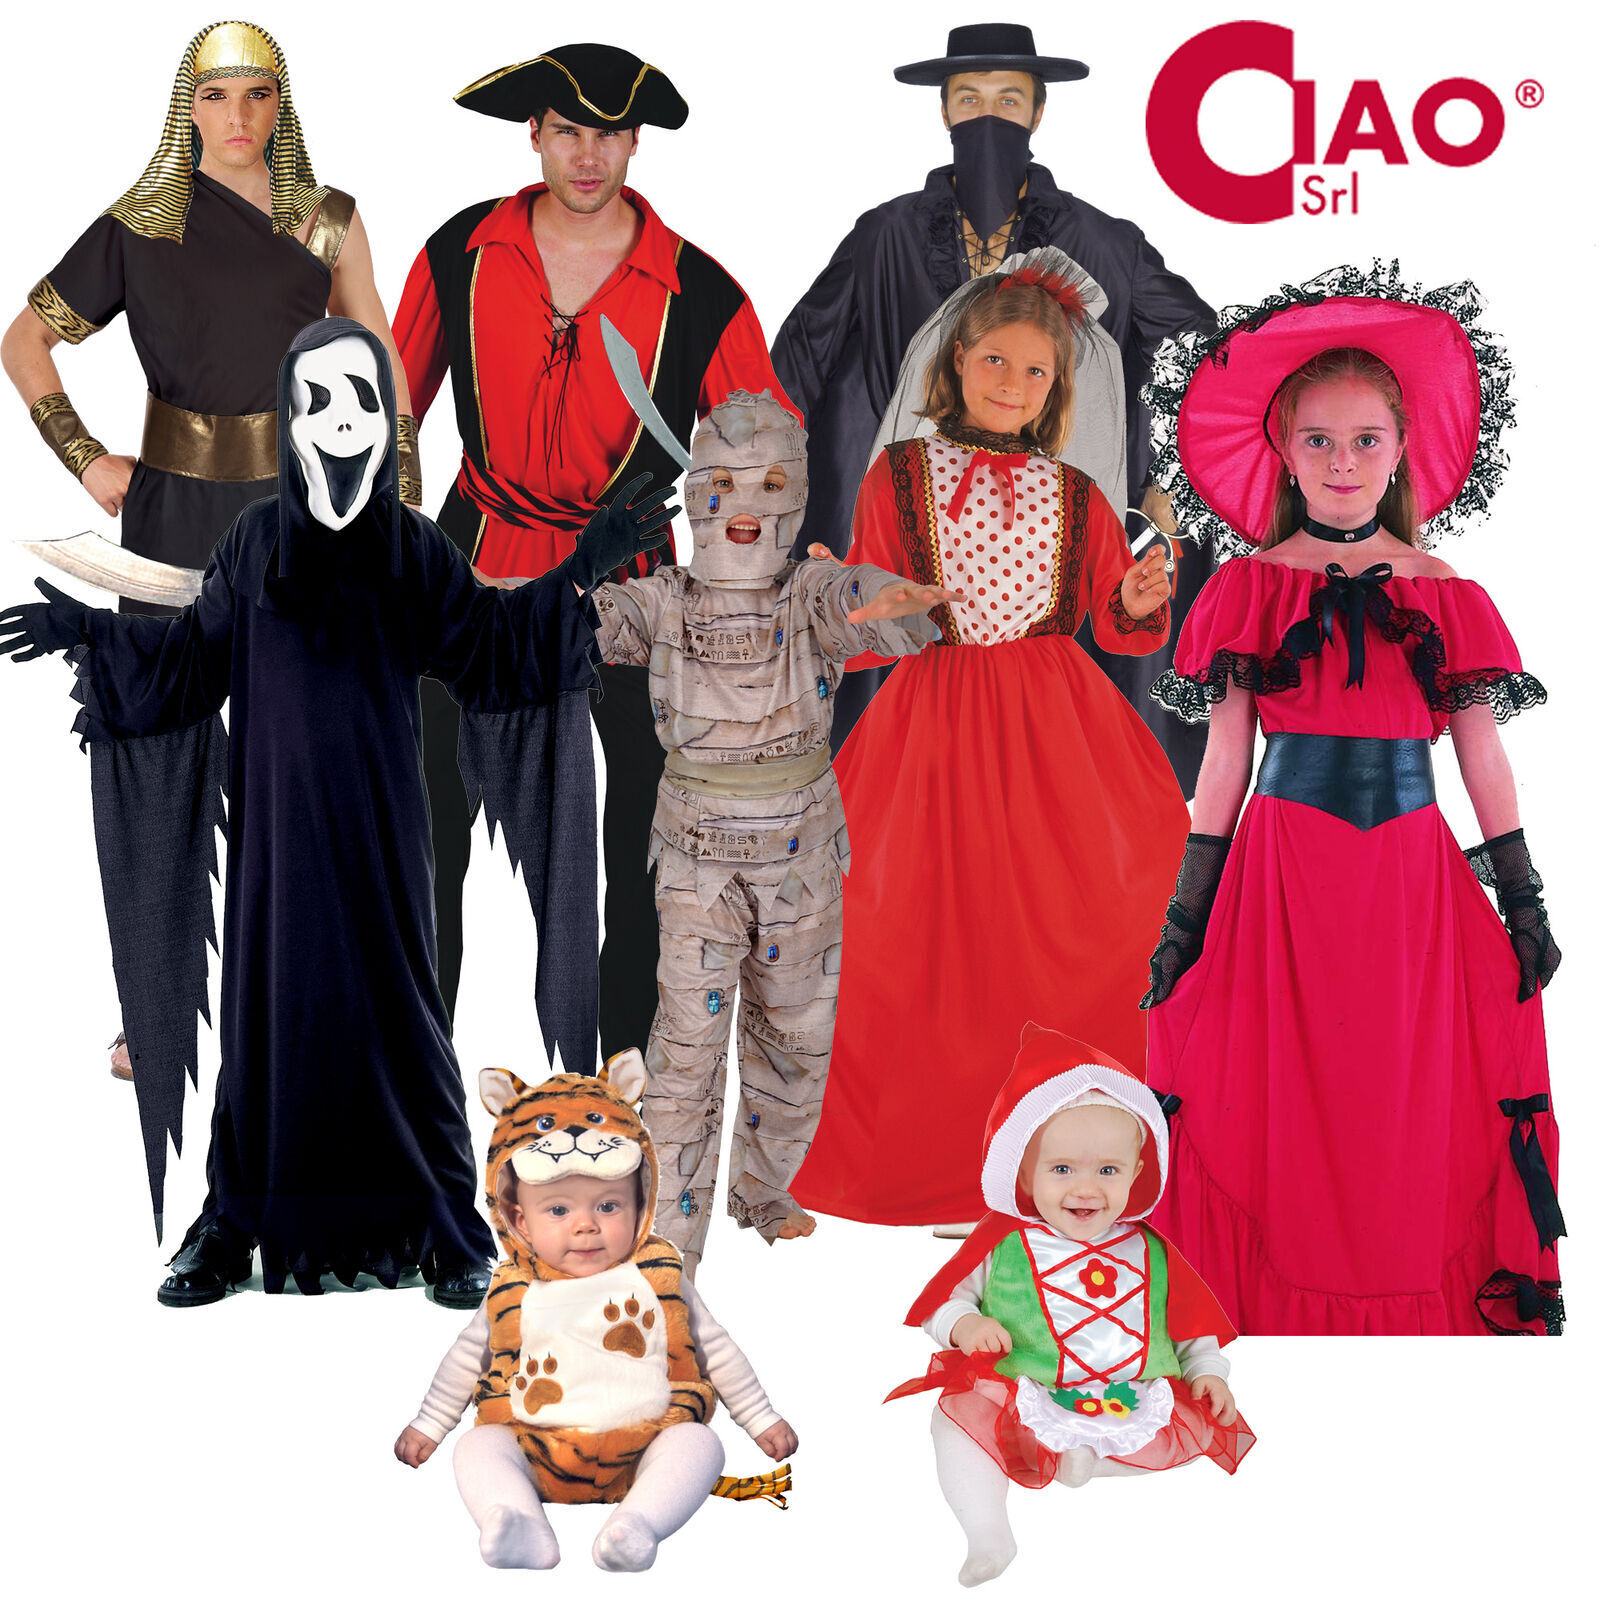 Costume Carnevale Travestimento Bambina Pippi Calzelunghe Originale Ciao  14598